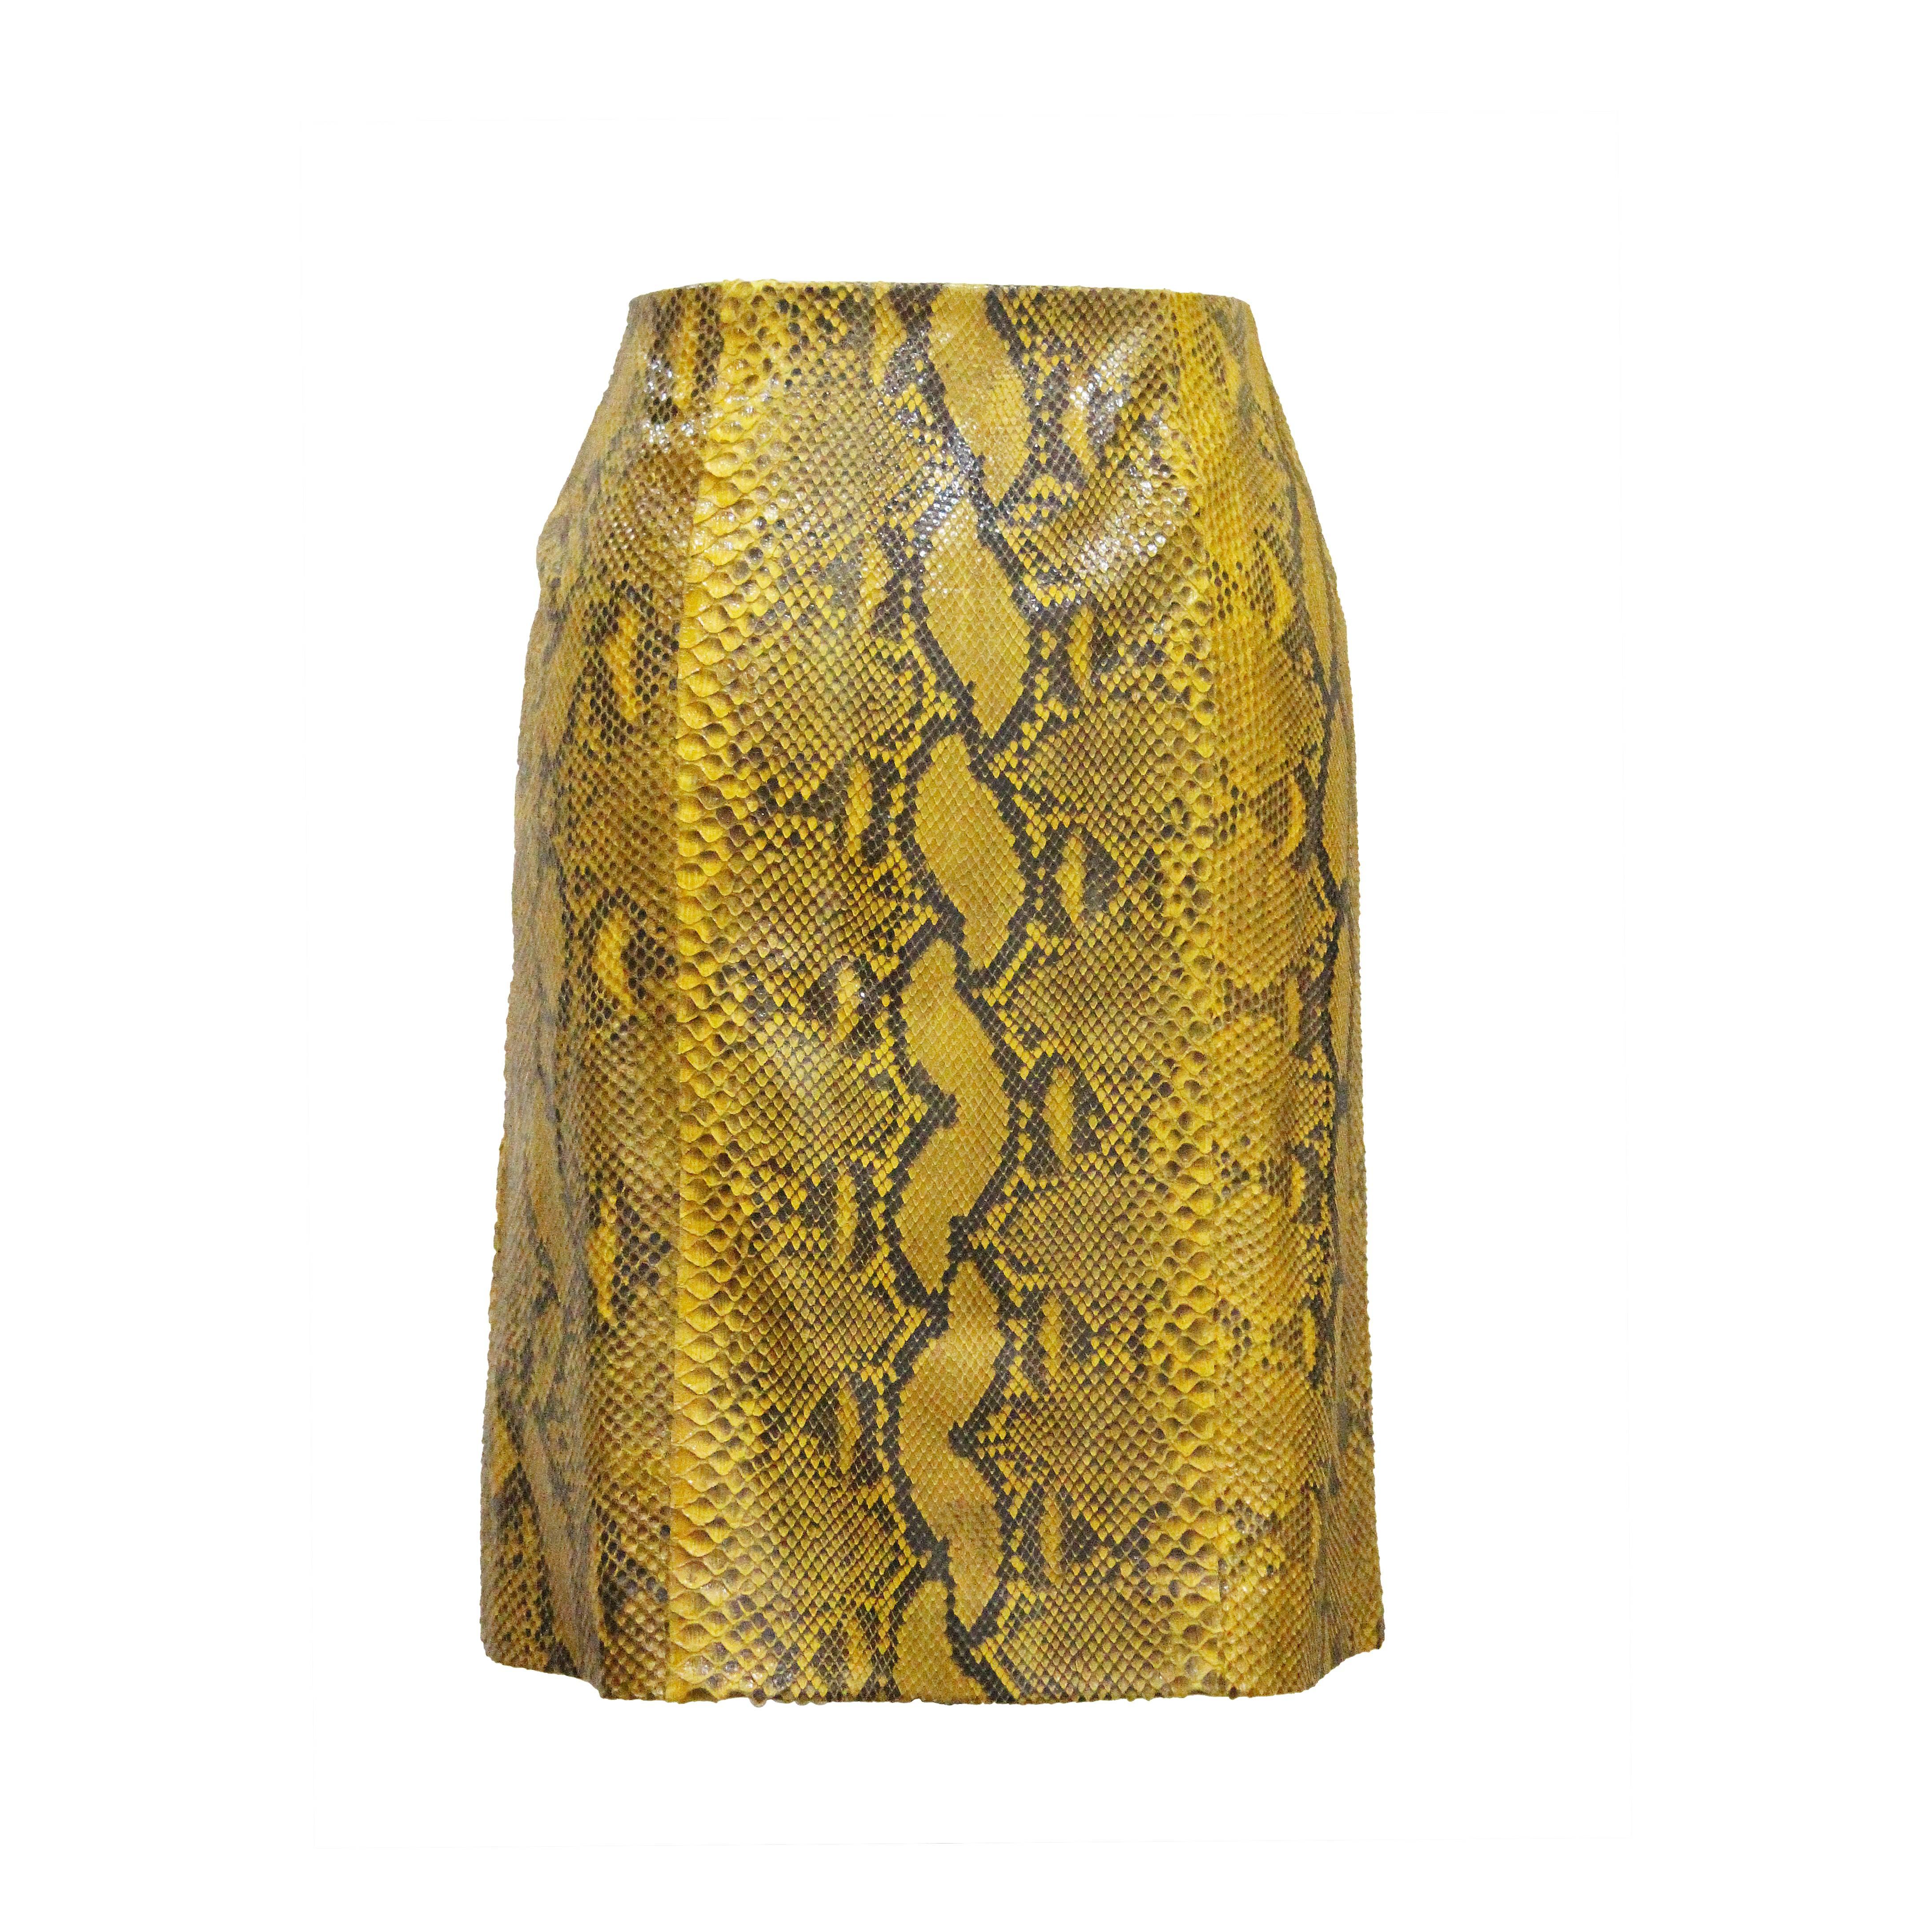 Gianfranco Ferre yellow python pencil skirt, c. 1990s